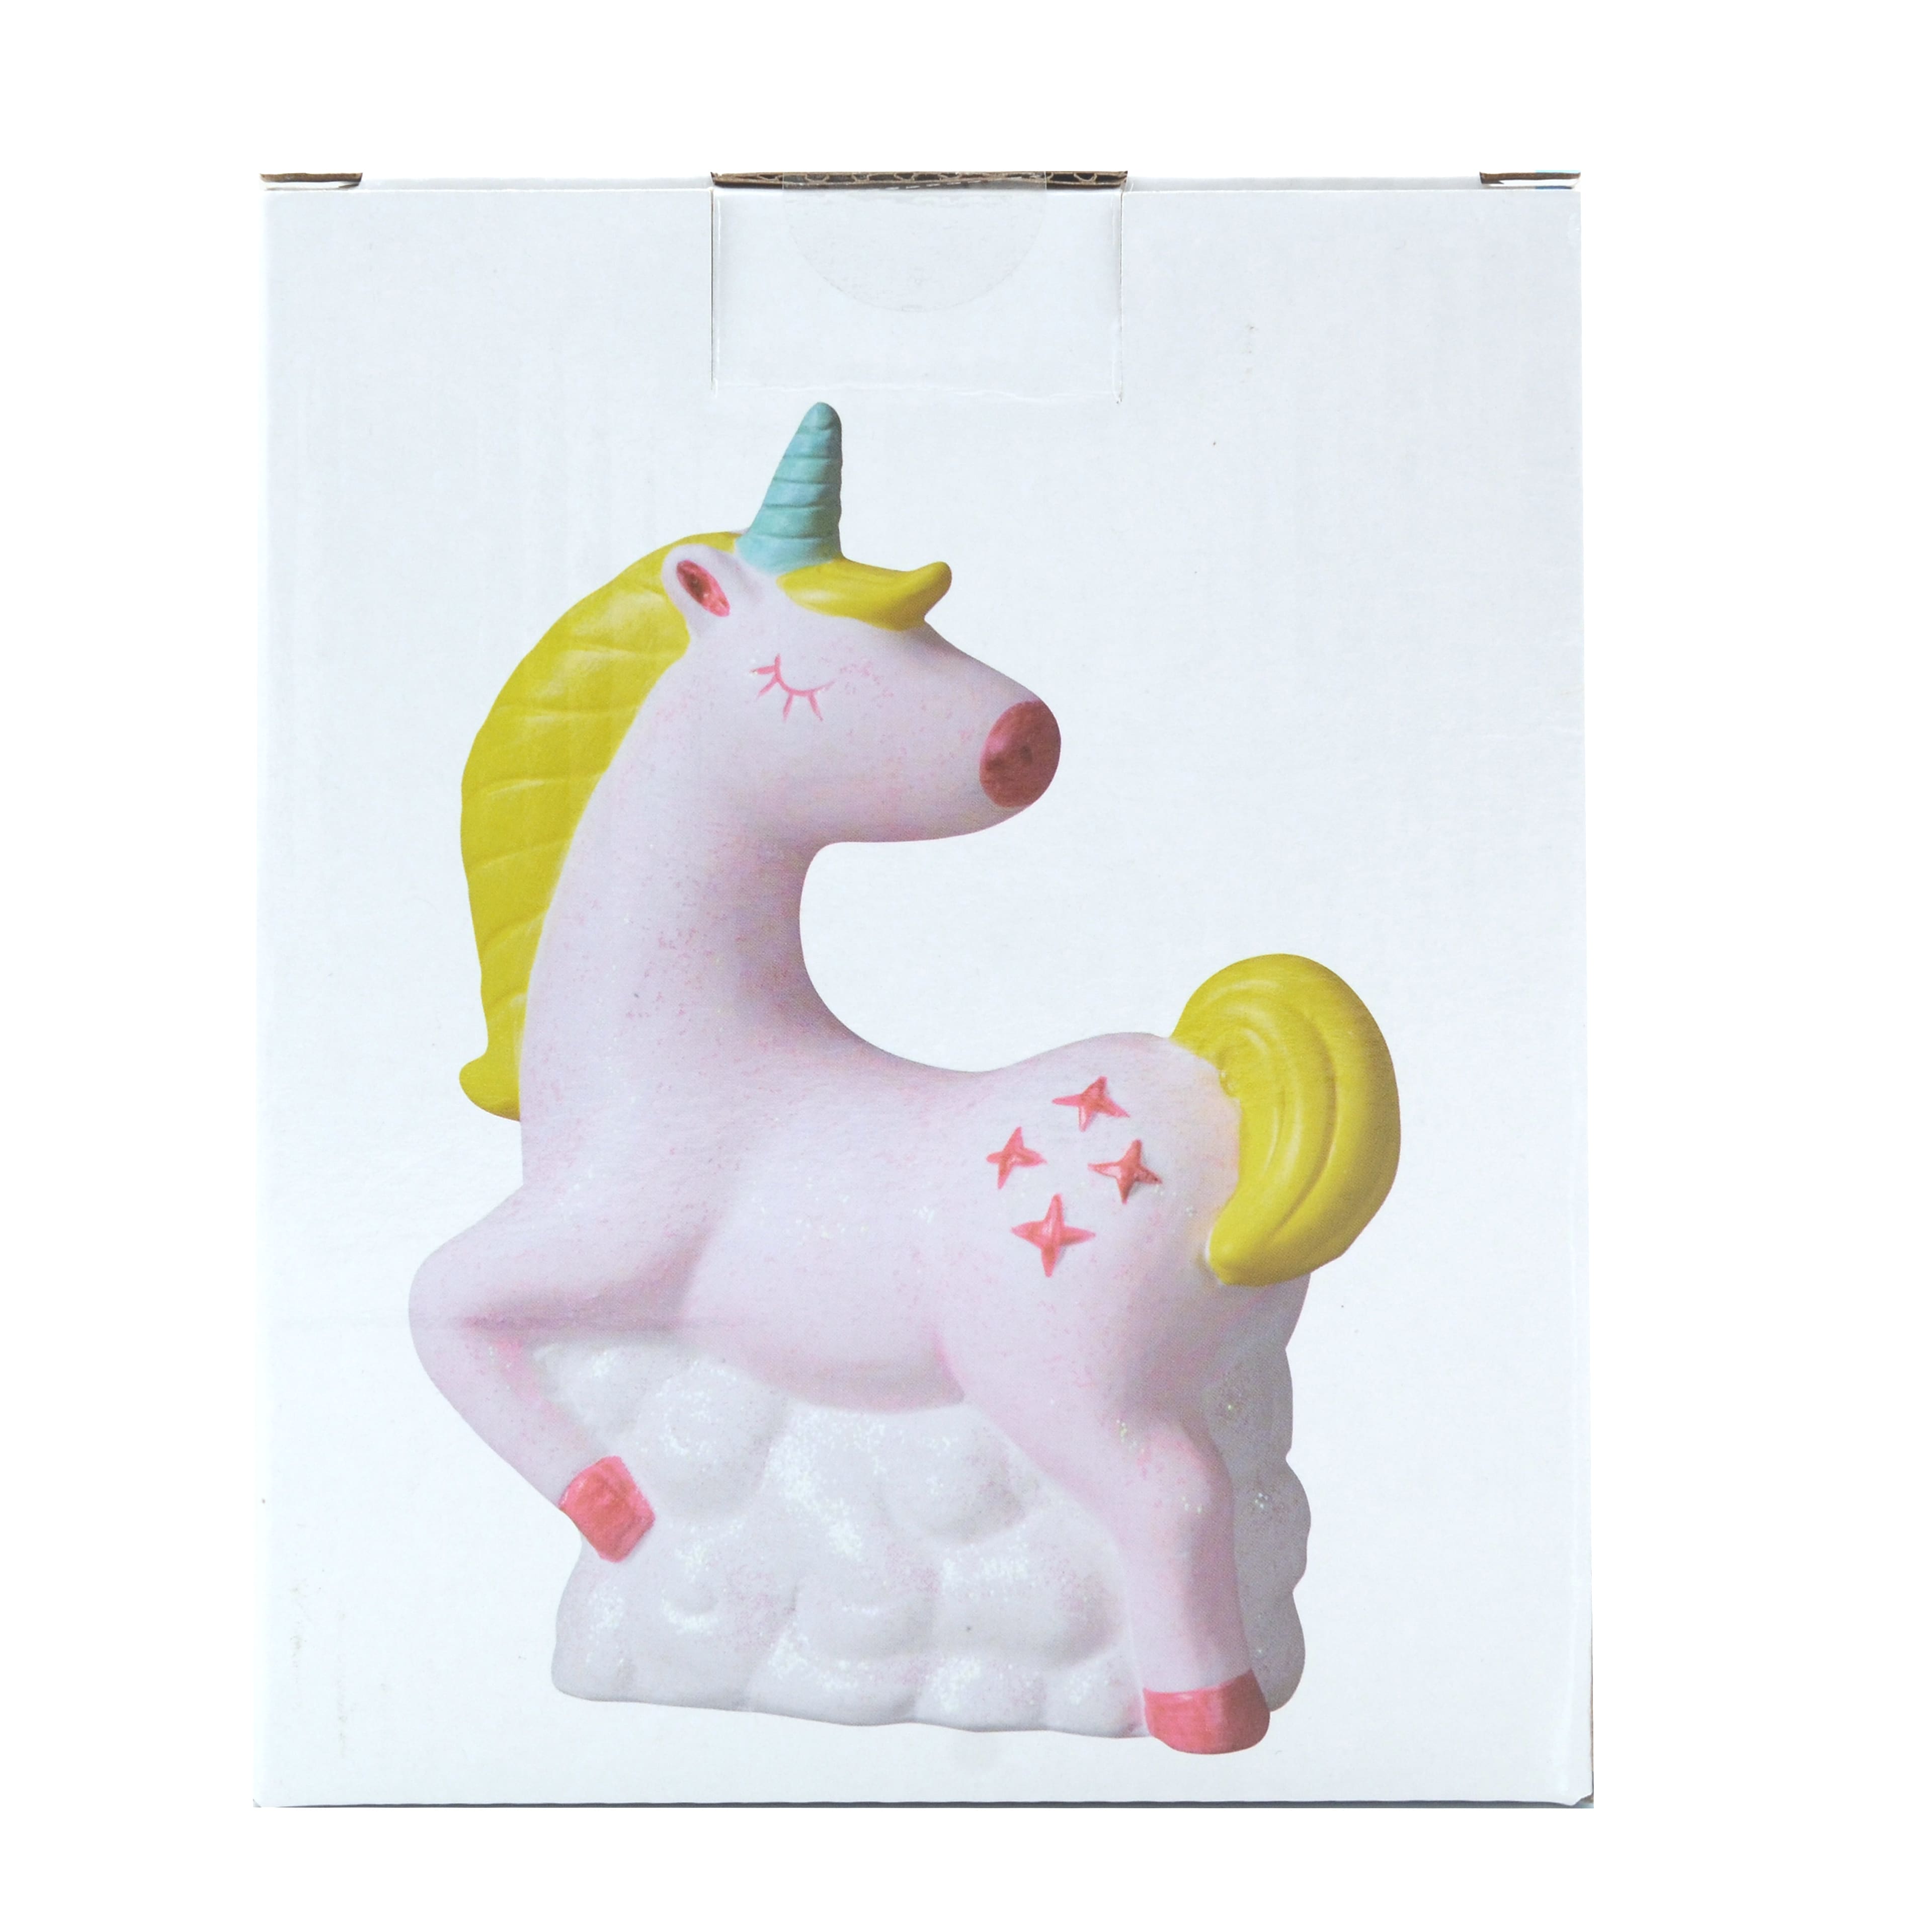 It's So Me! Paint Your Own Unicorns – DIY Ceramic Unicorn Kit